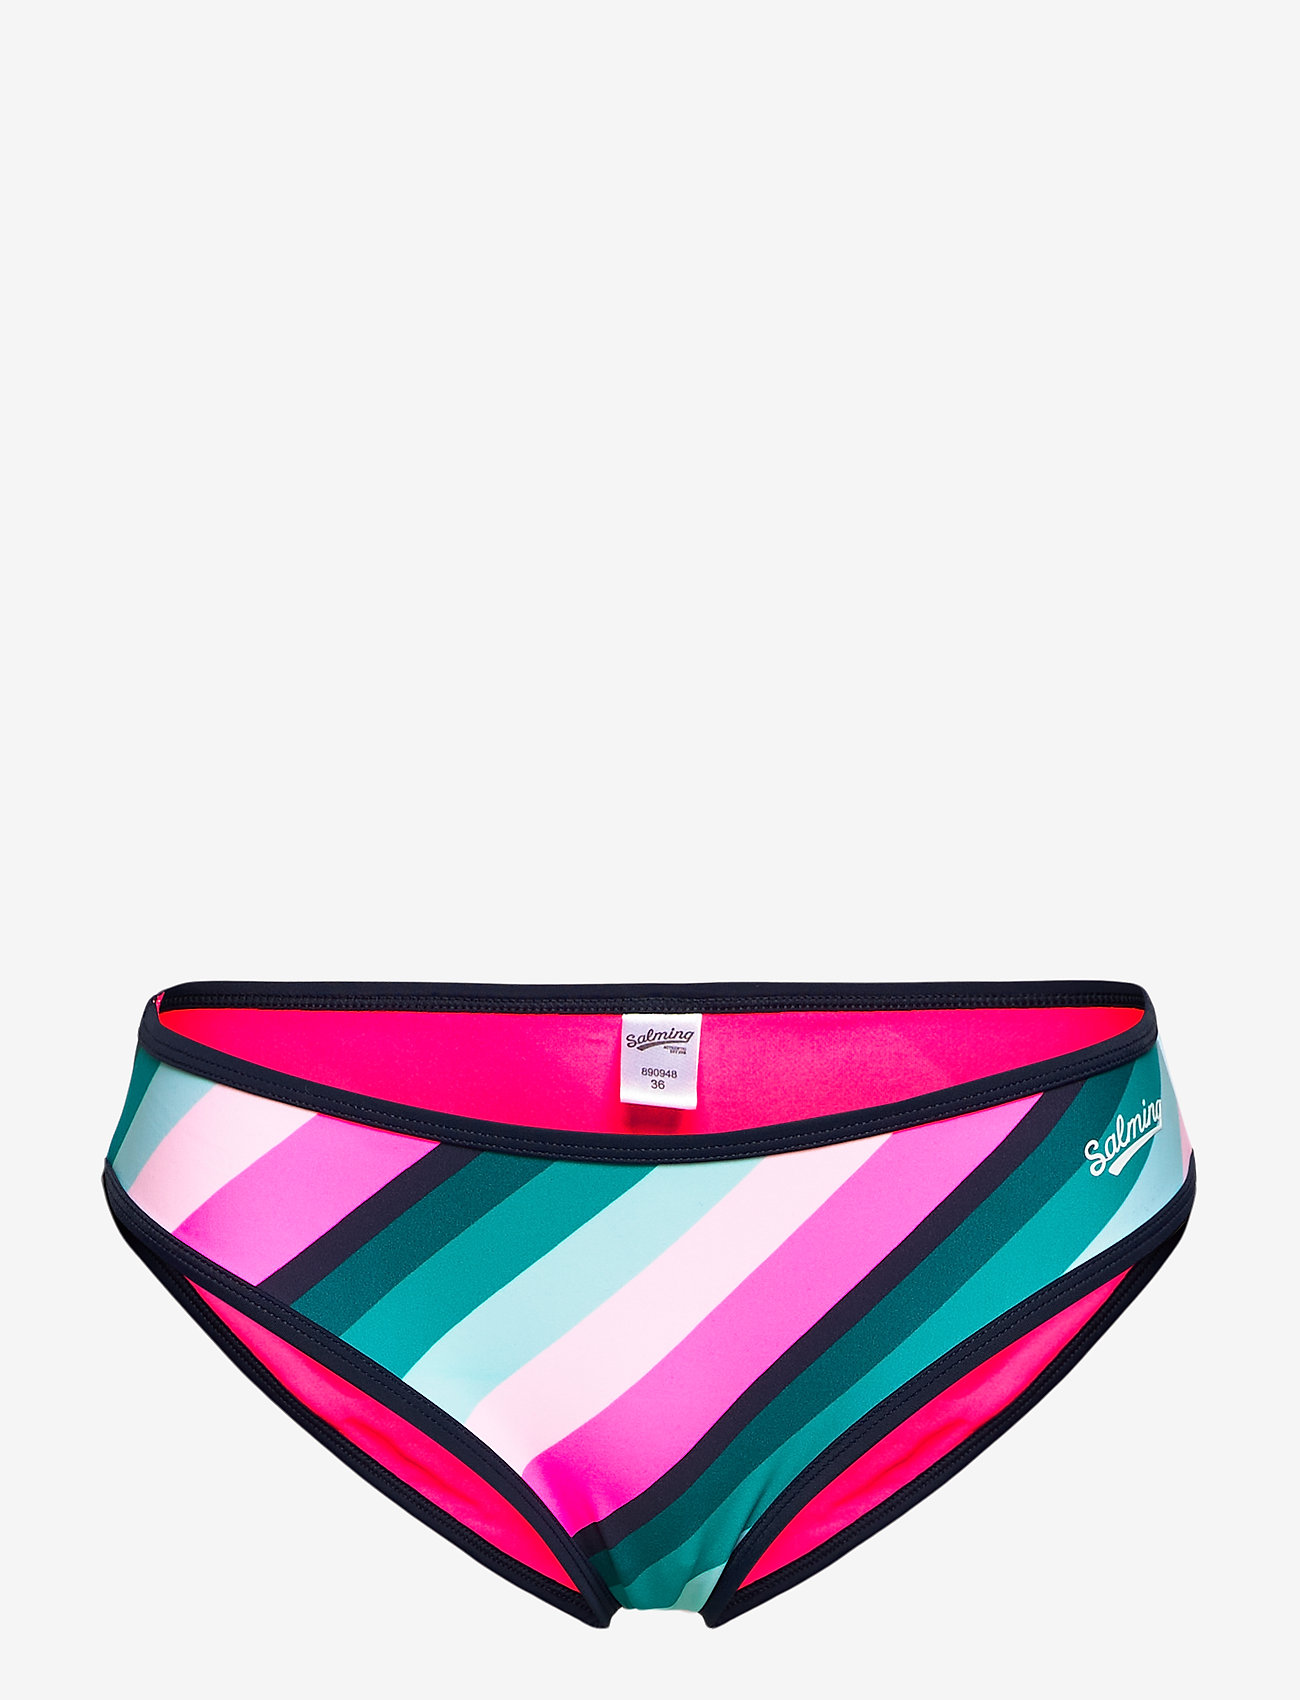 Salming - Rainbow brief - bikini briefs - navy/pink - 0